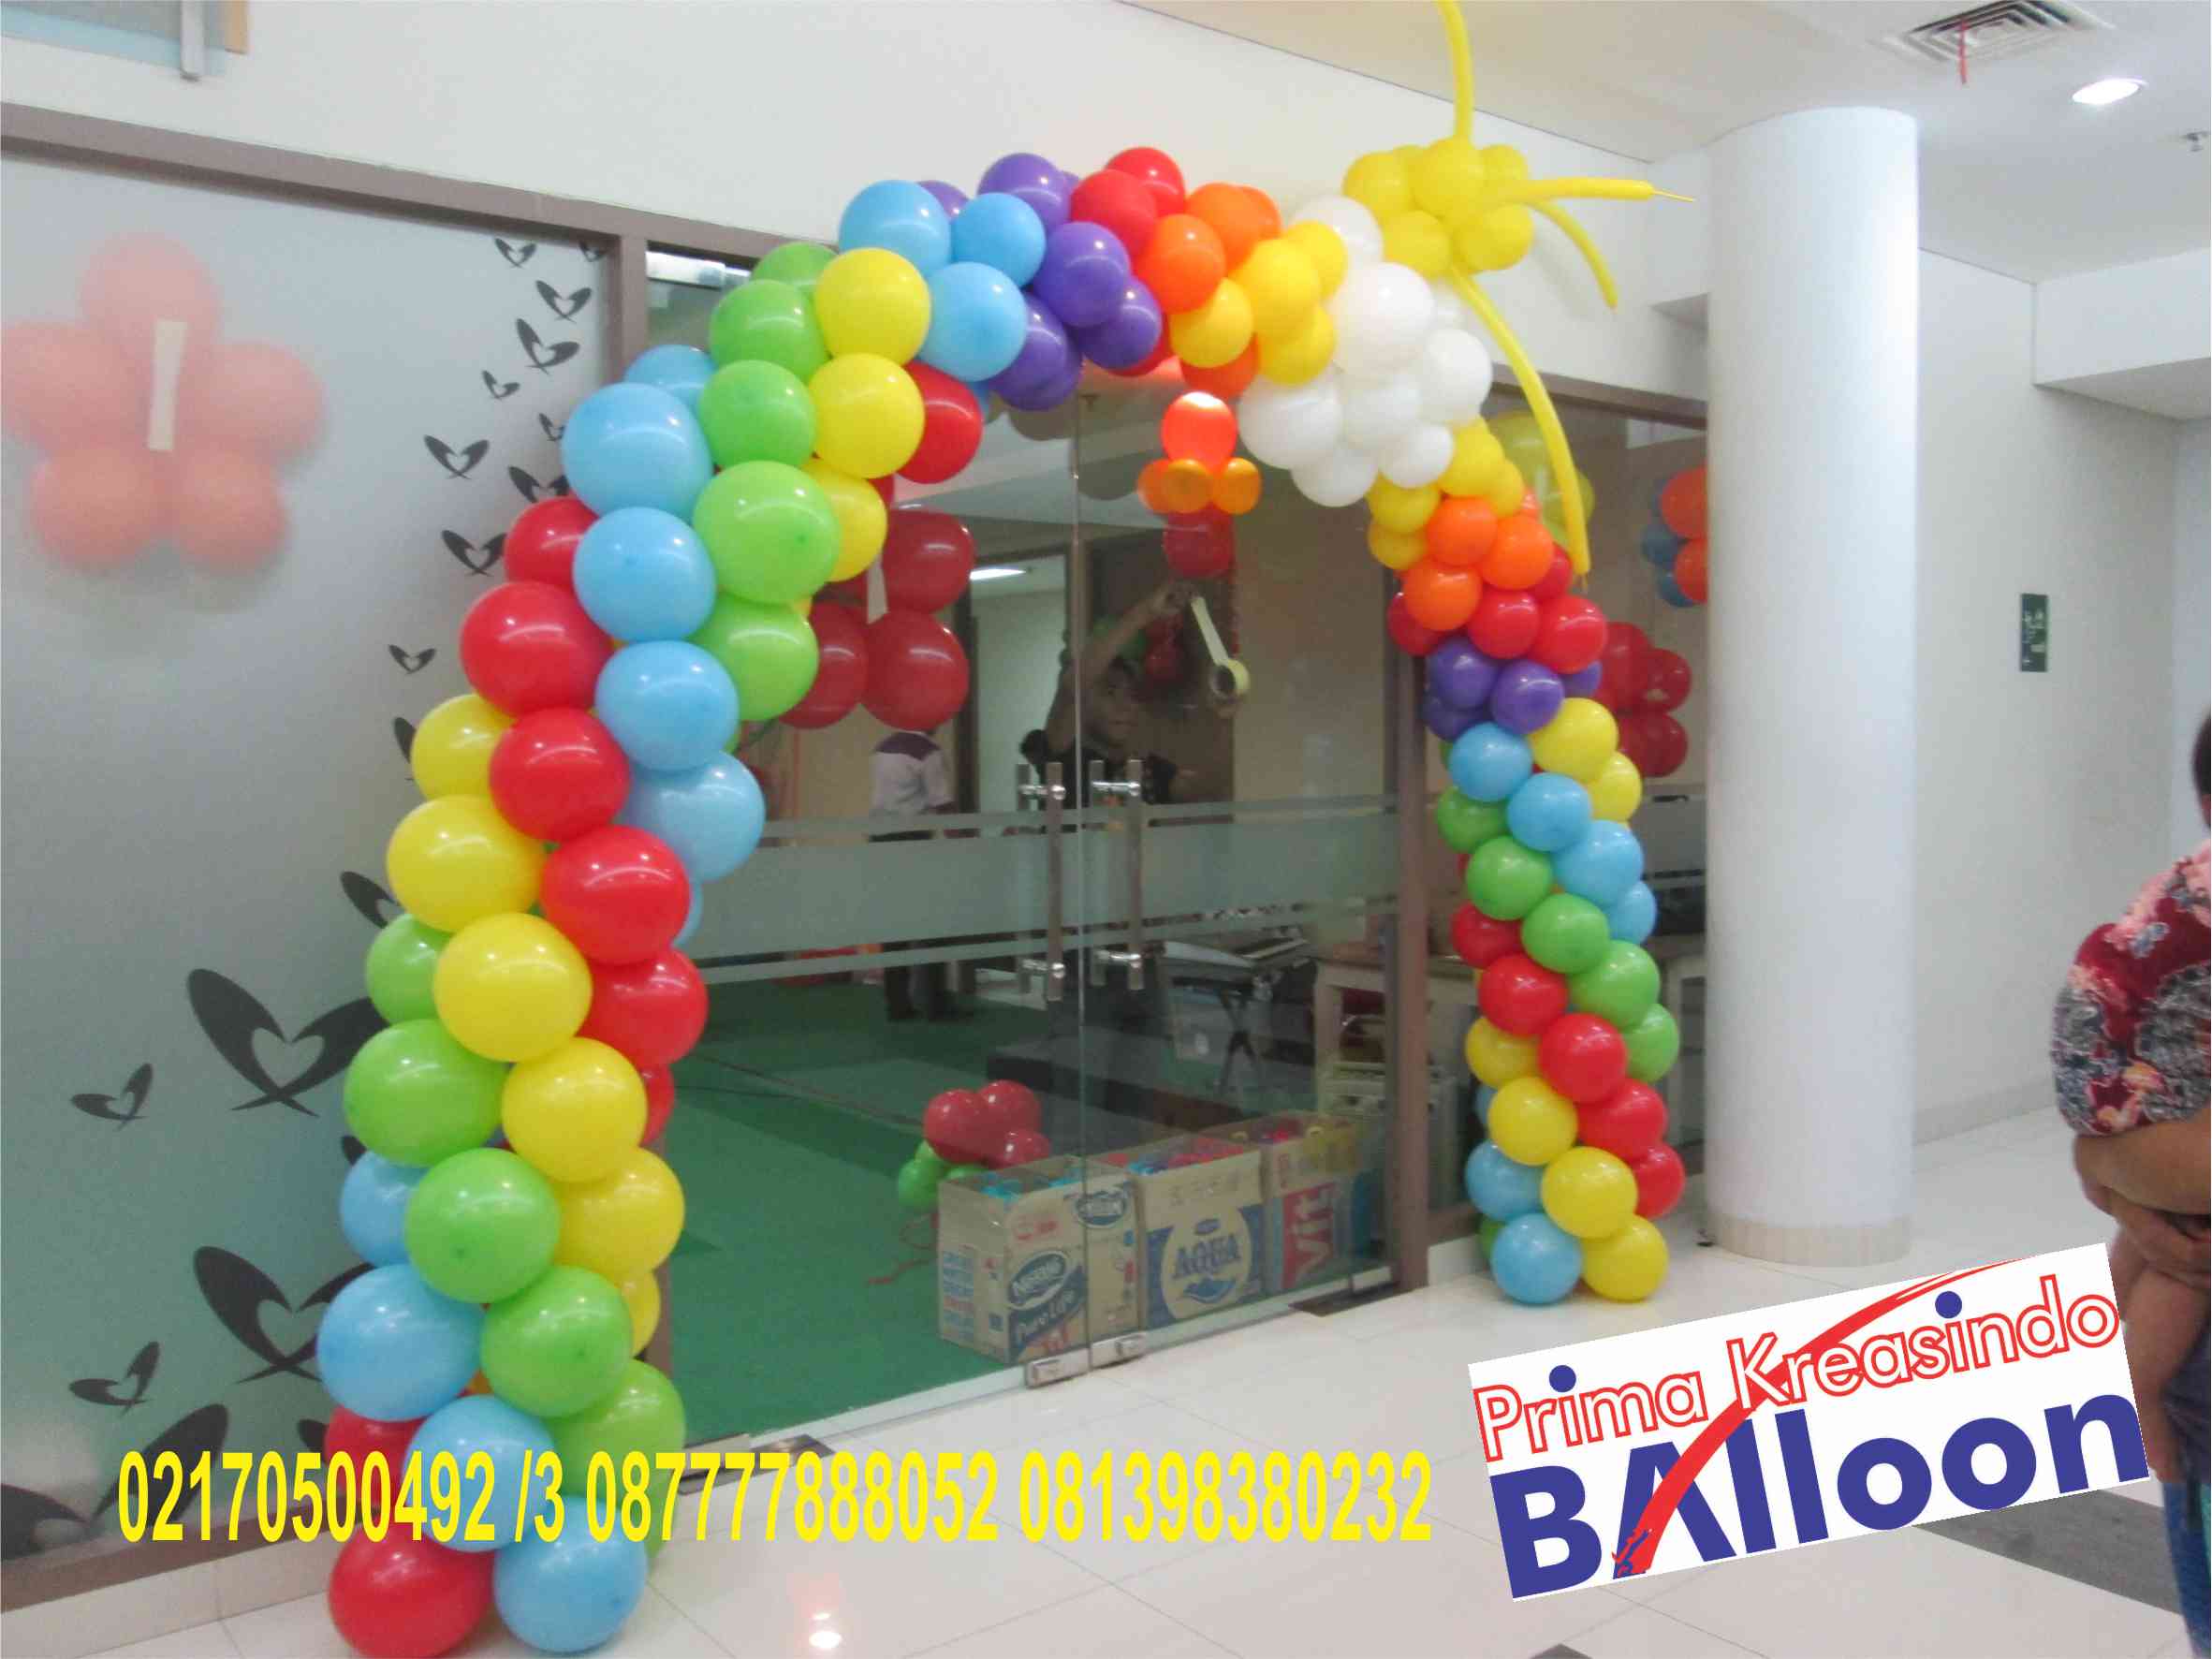 BALON  DEKORASI  P K BALON  Prima Kreasindo Balon